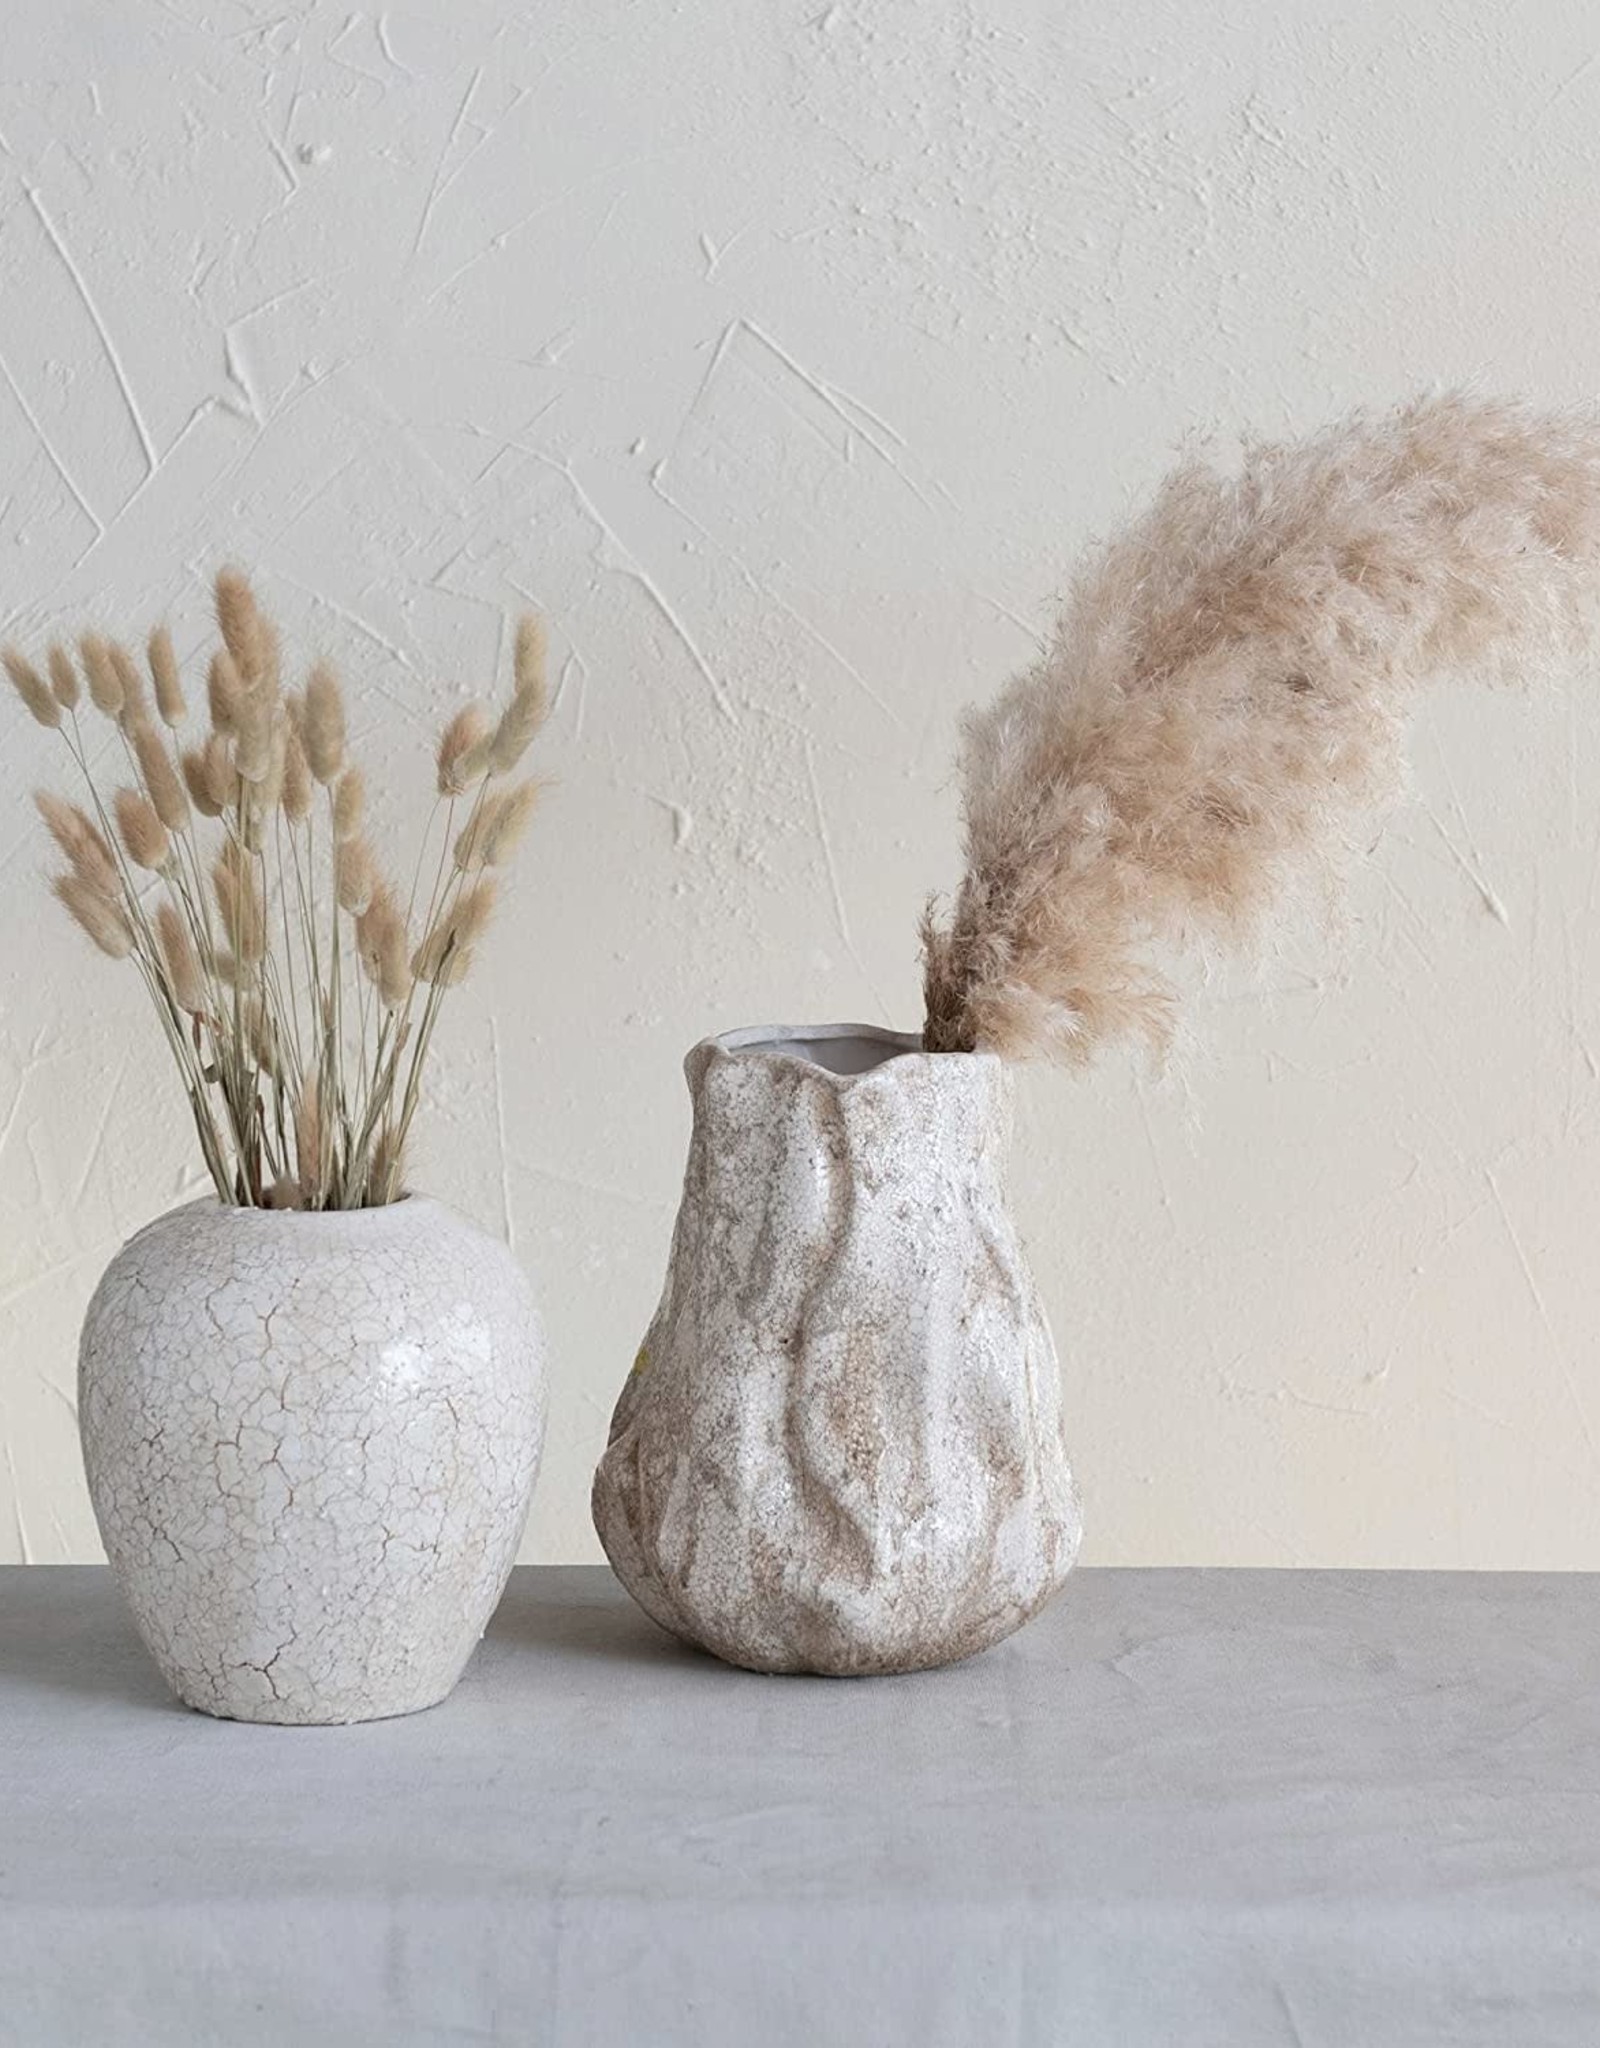 Stoneware Vase, Crackle Glaze, Distressed Cream